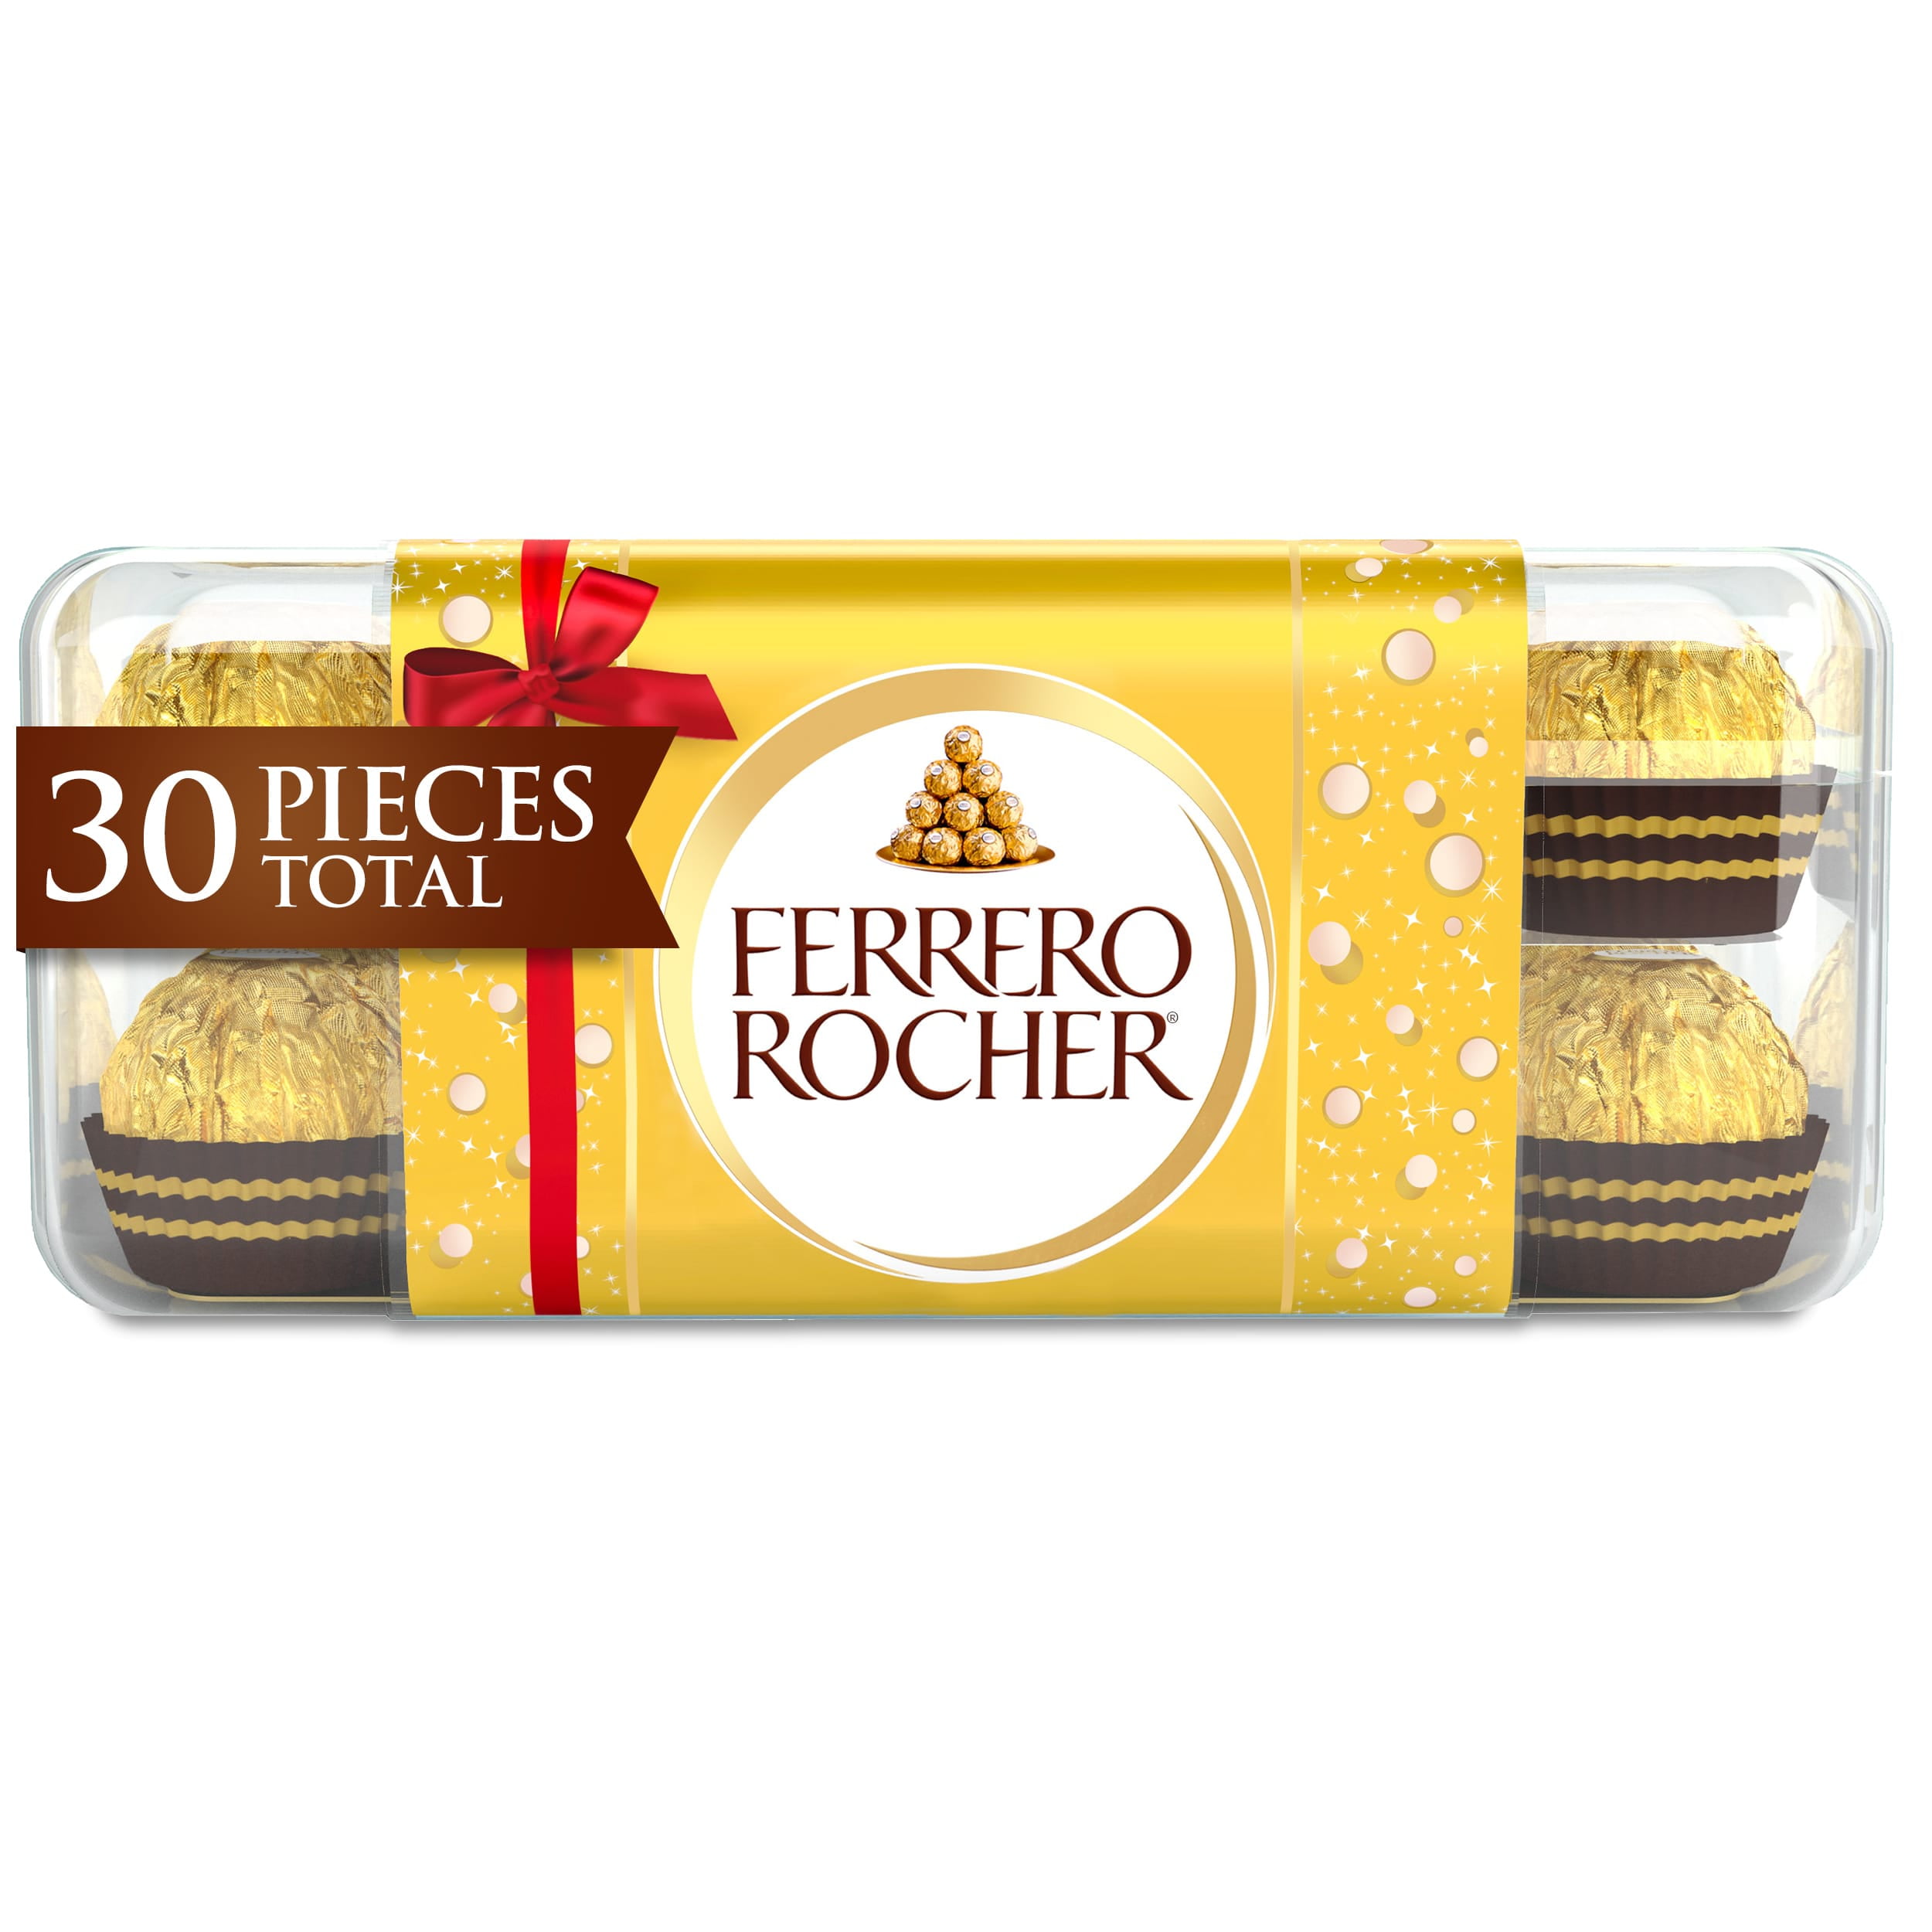 Ferrero Collection. Assorted The Best of Ferrero. 4.6 oz (129g